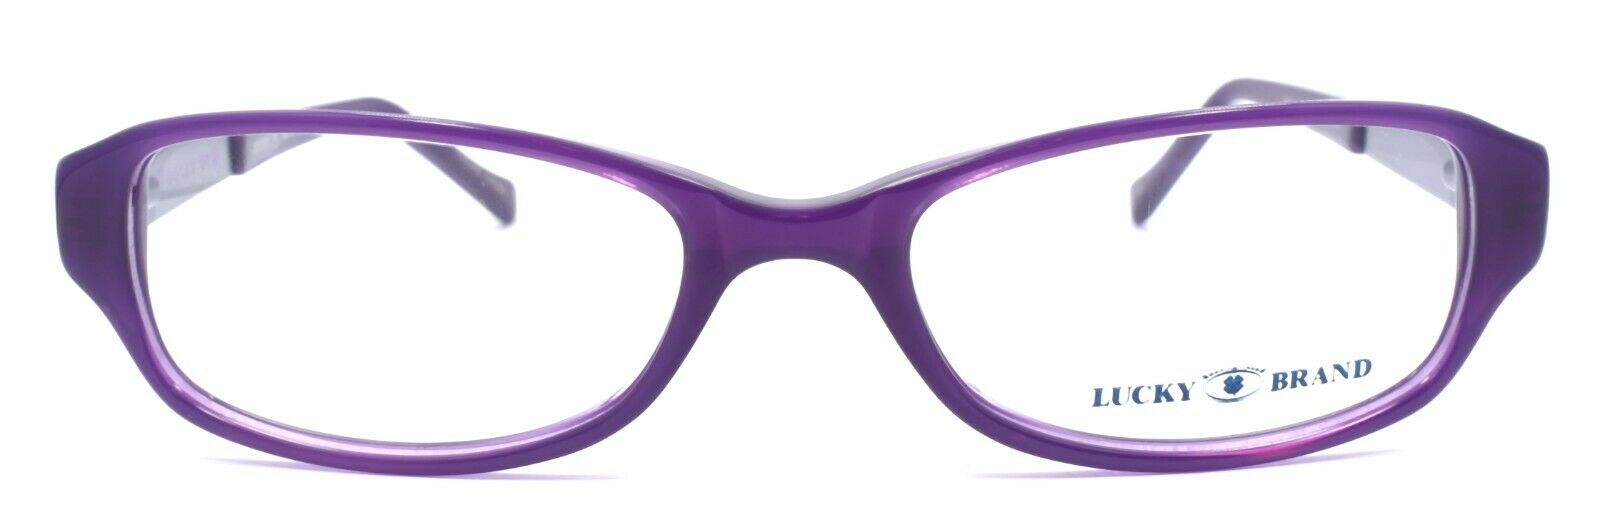 2-LUCKY BRAND Jade Kids Girls Eyeglasses Frames 48-16-130 Purple + CASE-751286136531-IKSpecs